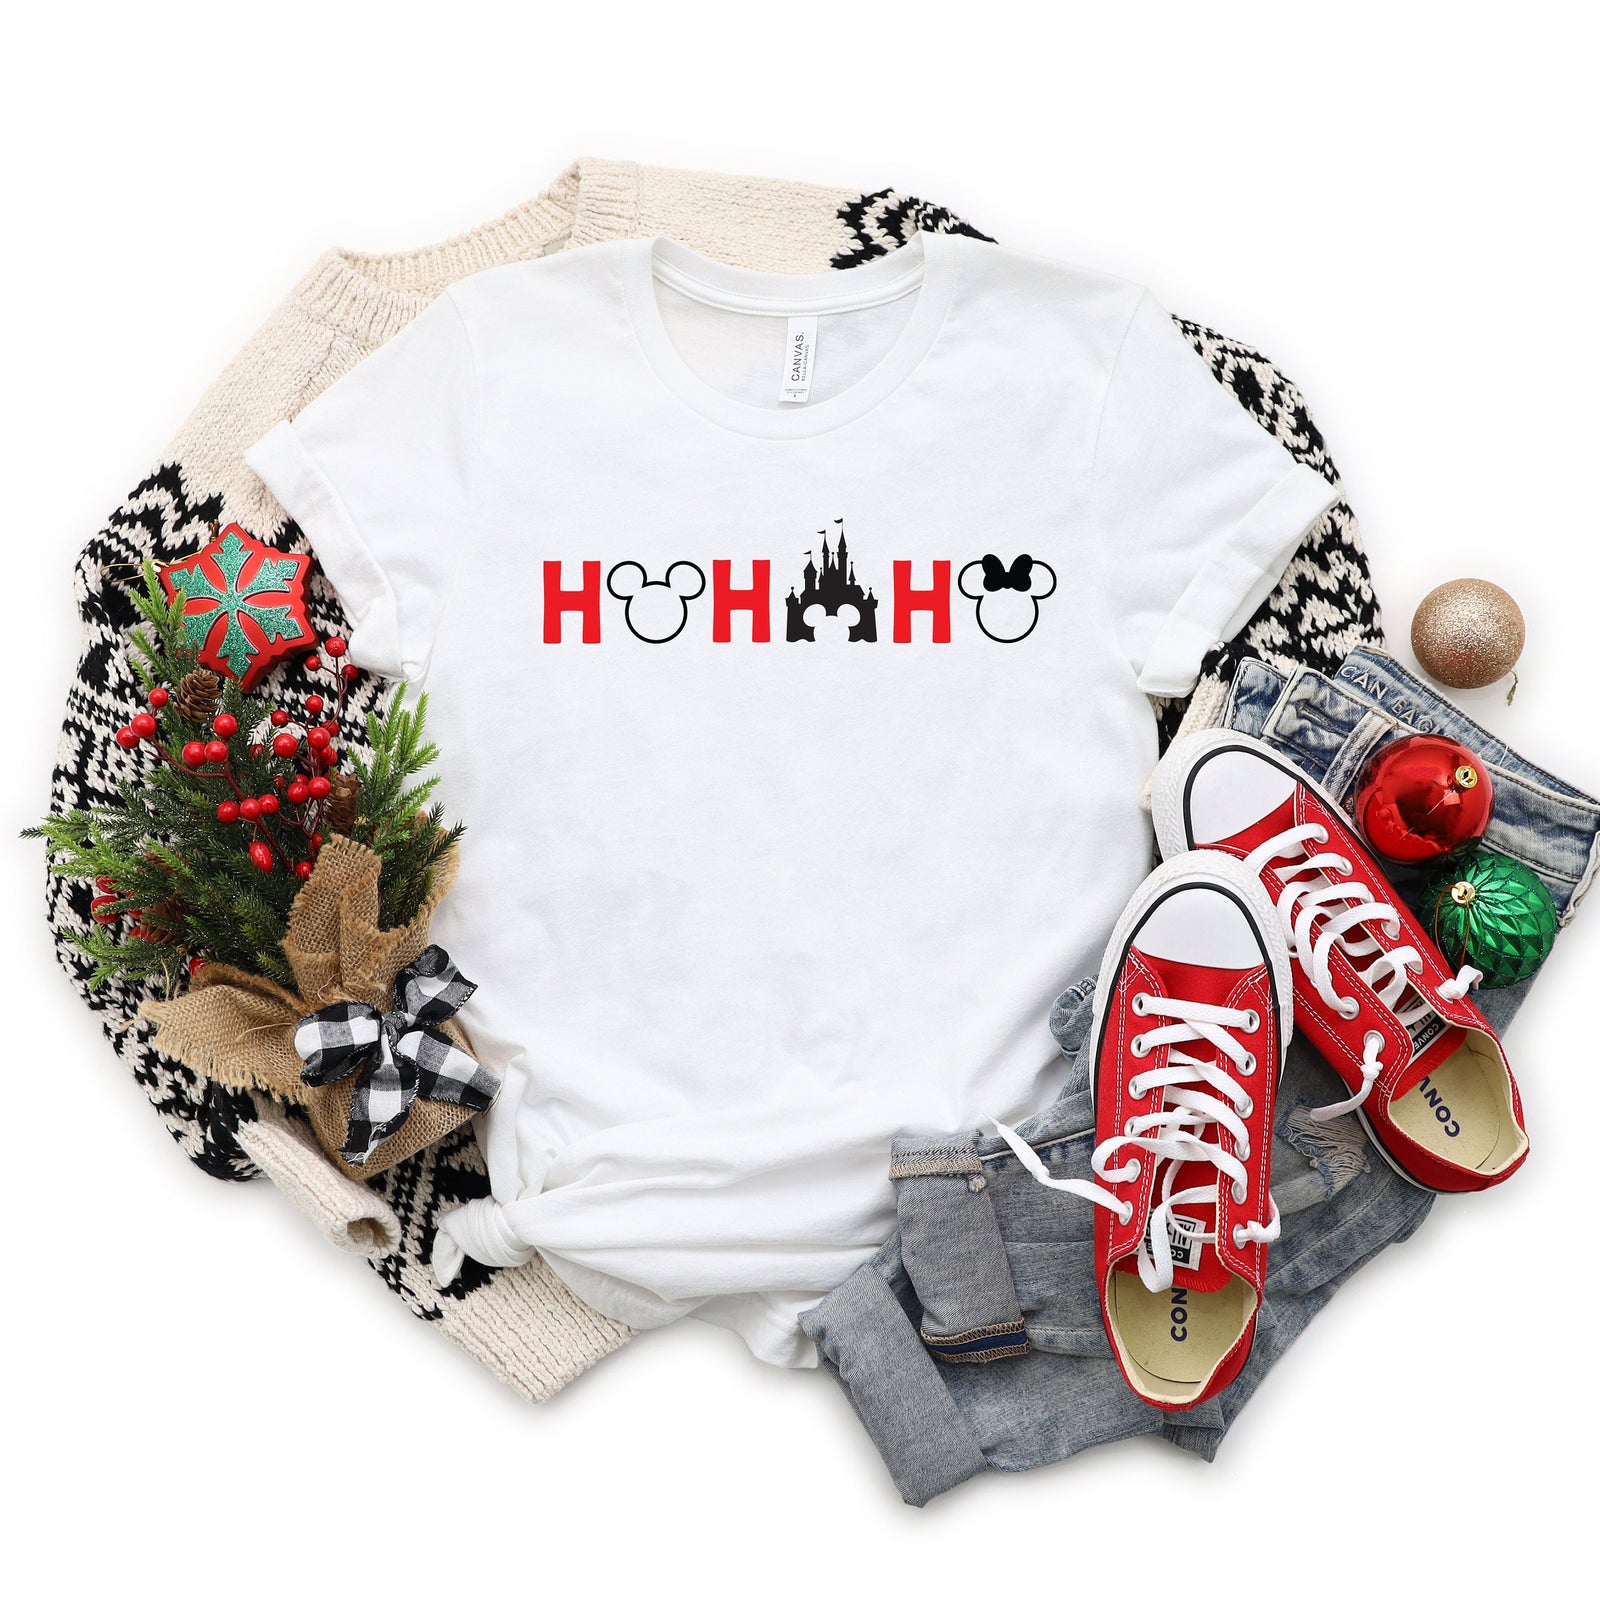 Ho Ho Ho Minnie and Mickey T Shirt- Disney Trip Matching Shirts - Family Holiday Vacation